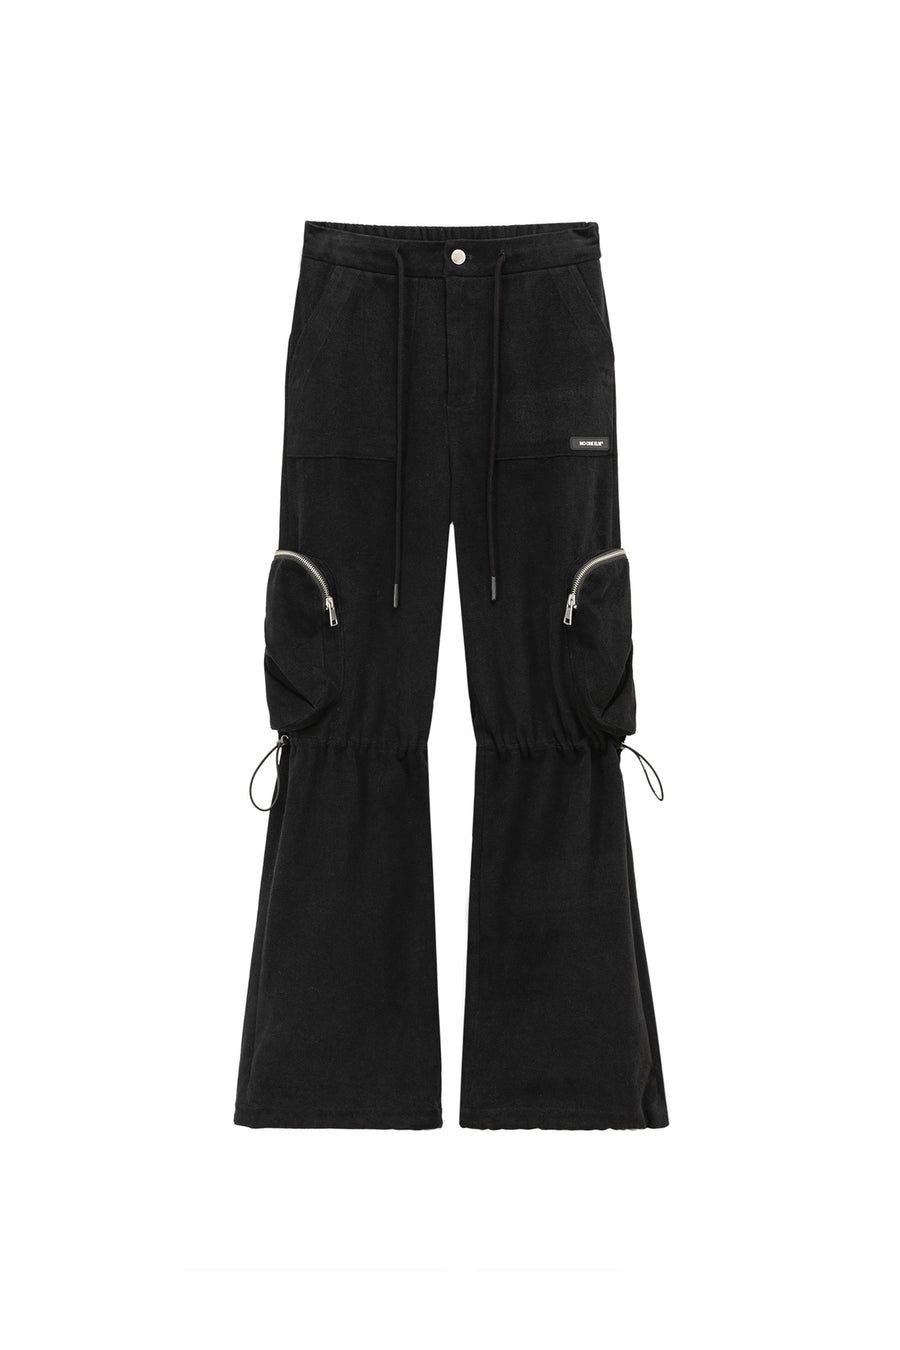 CHUU Zipper Pocket Casual Pants